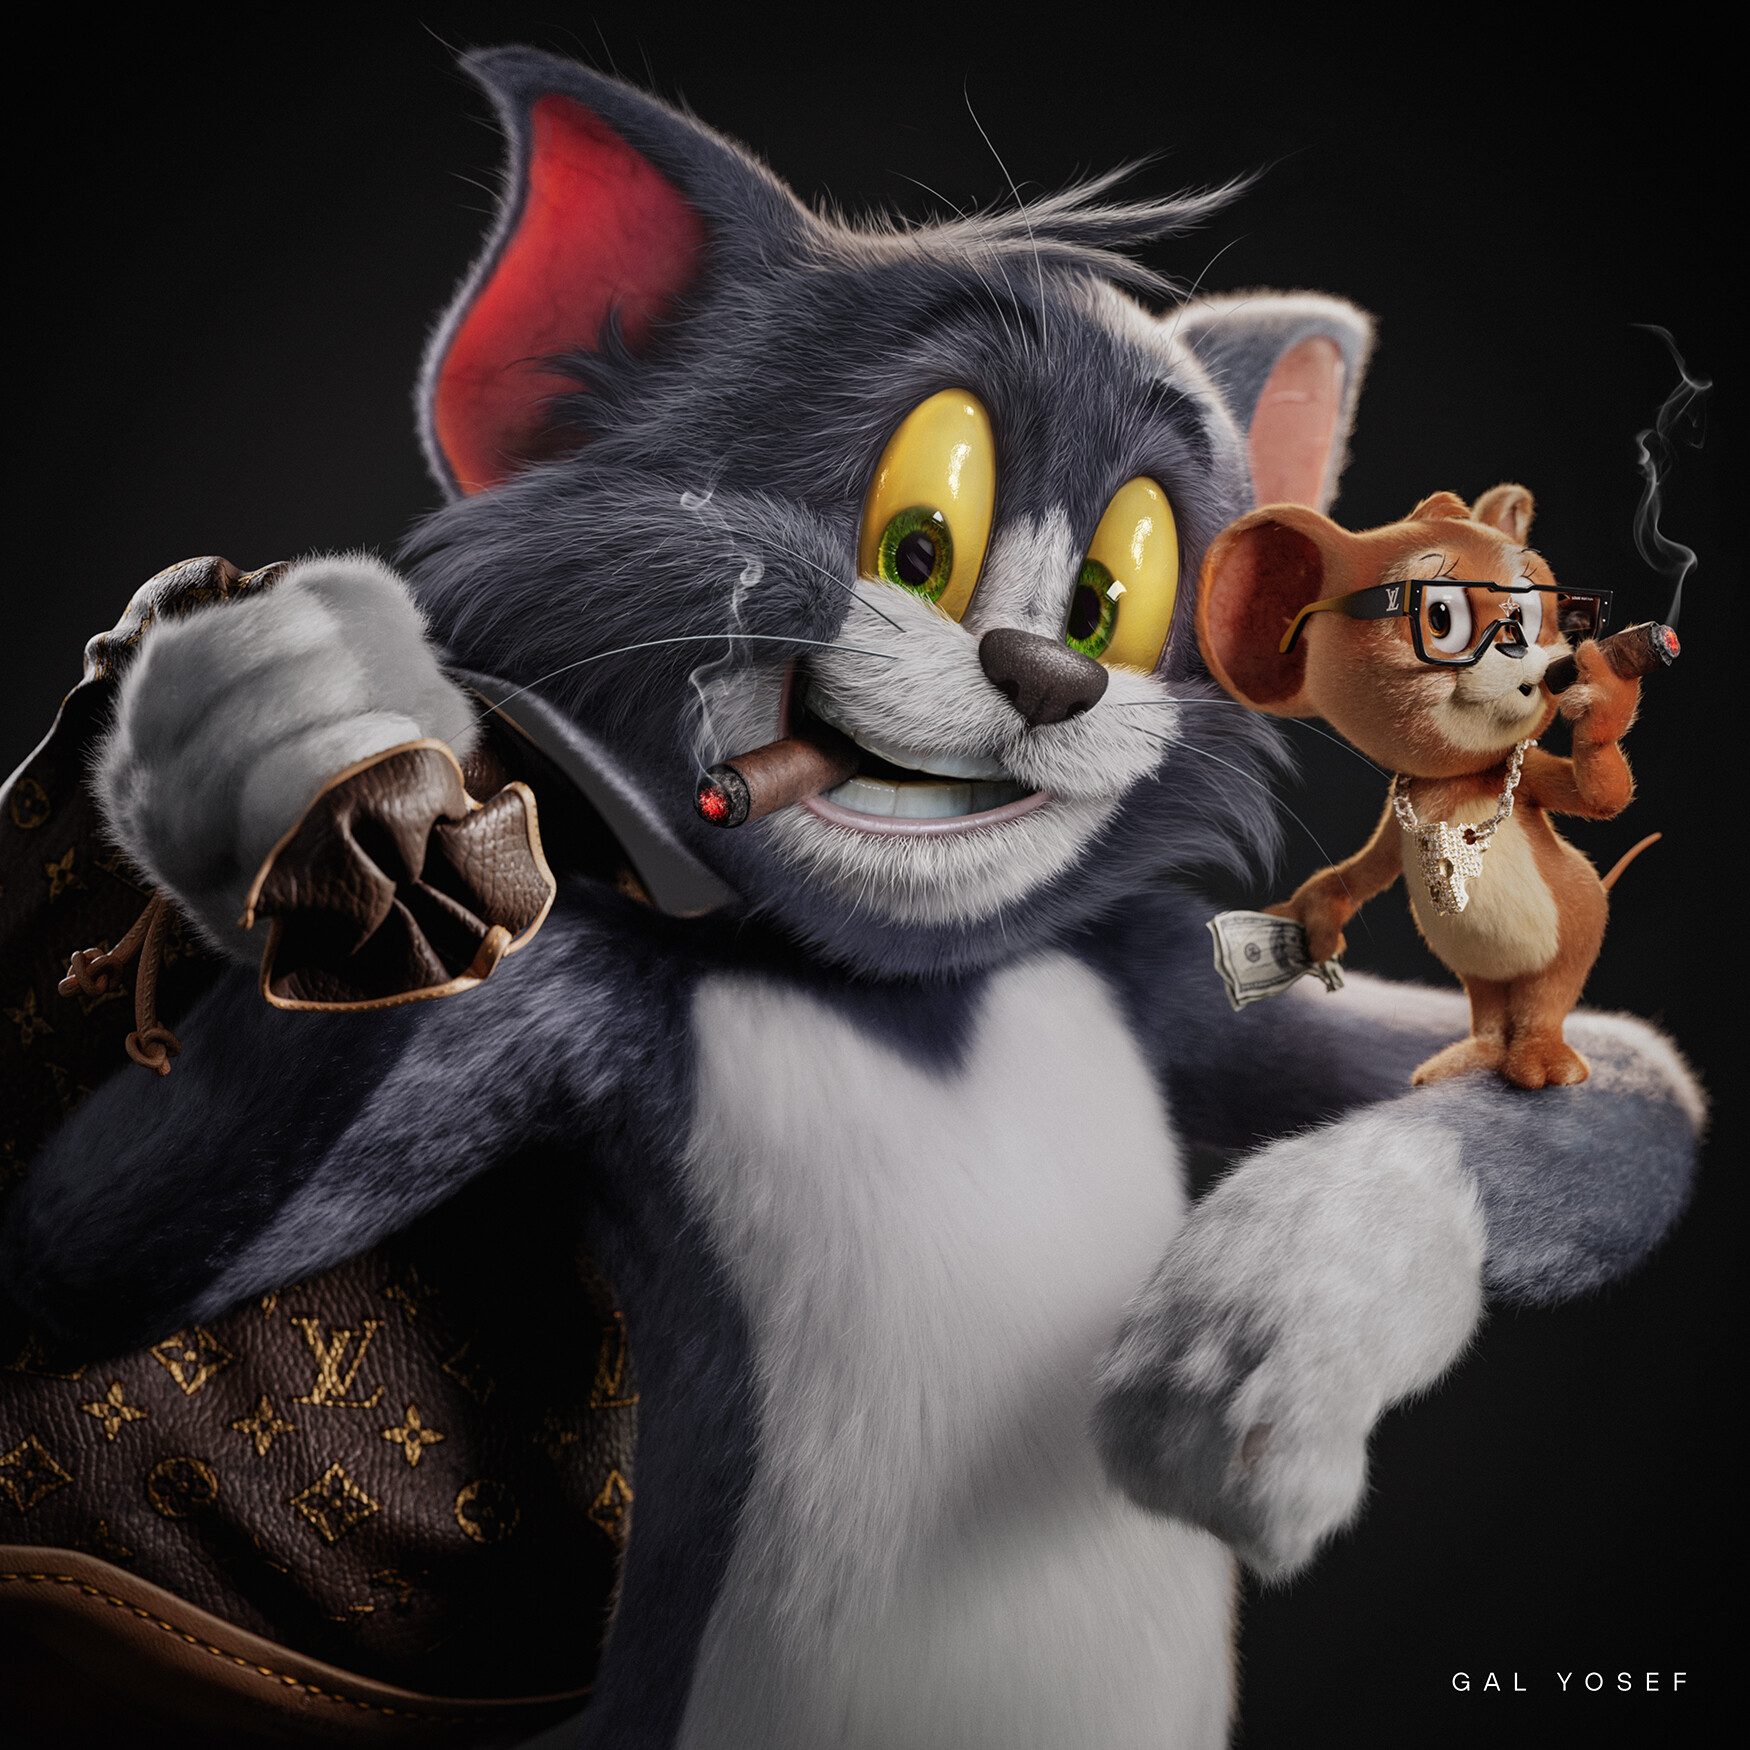 Artwork Digital Art Tom And Jerry Cartoon Smoking Cigars Cats Mice Gal  Yosef Wallpaper - Resolution:1750x1750 - ID:1343389 